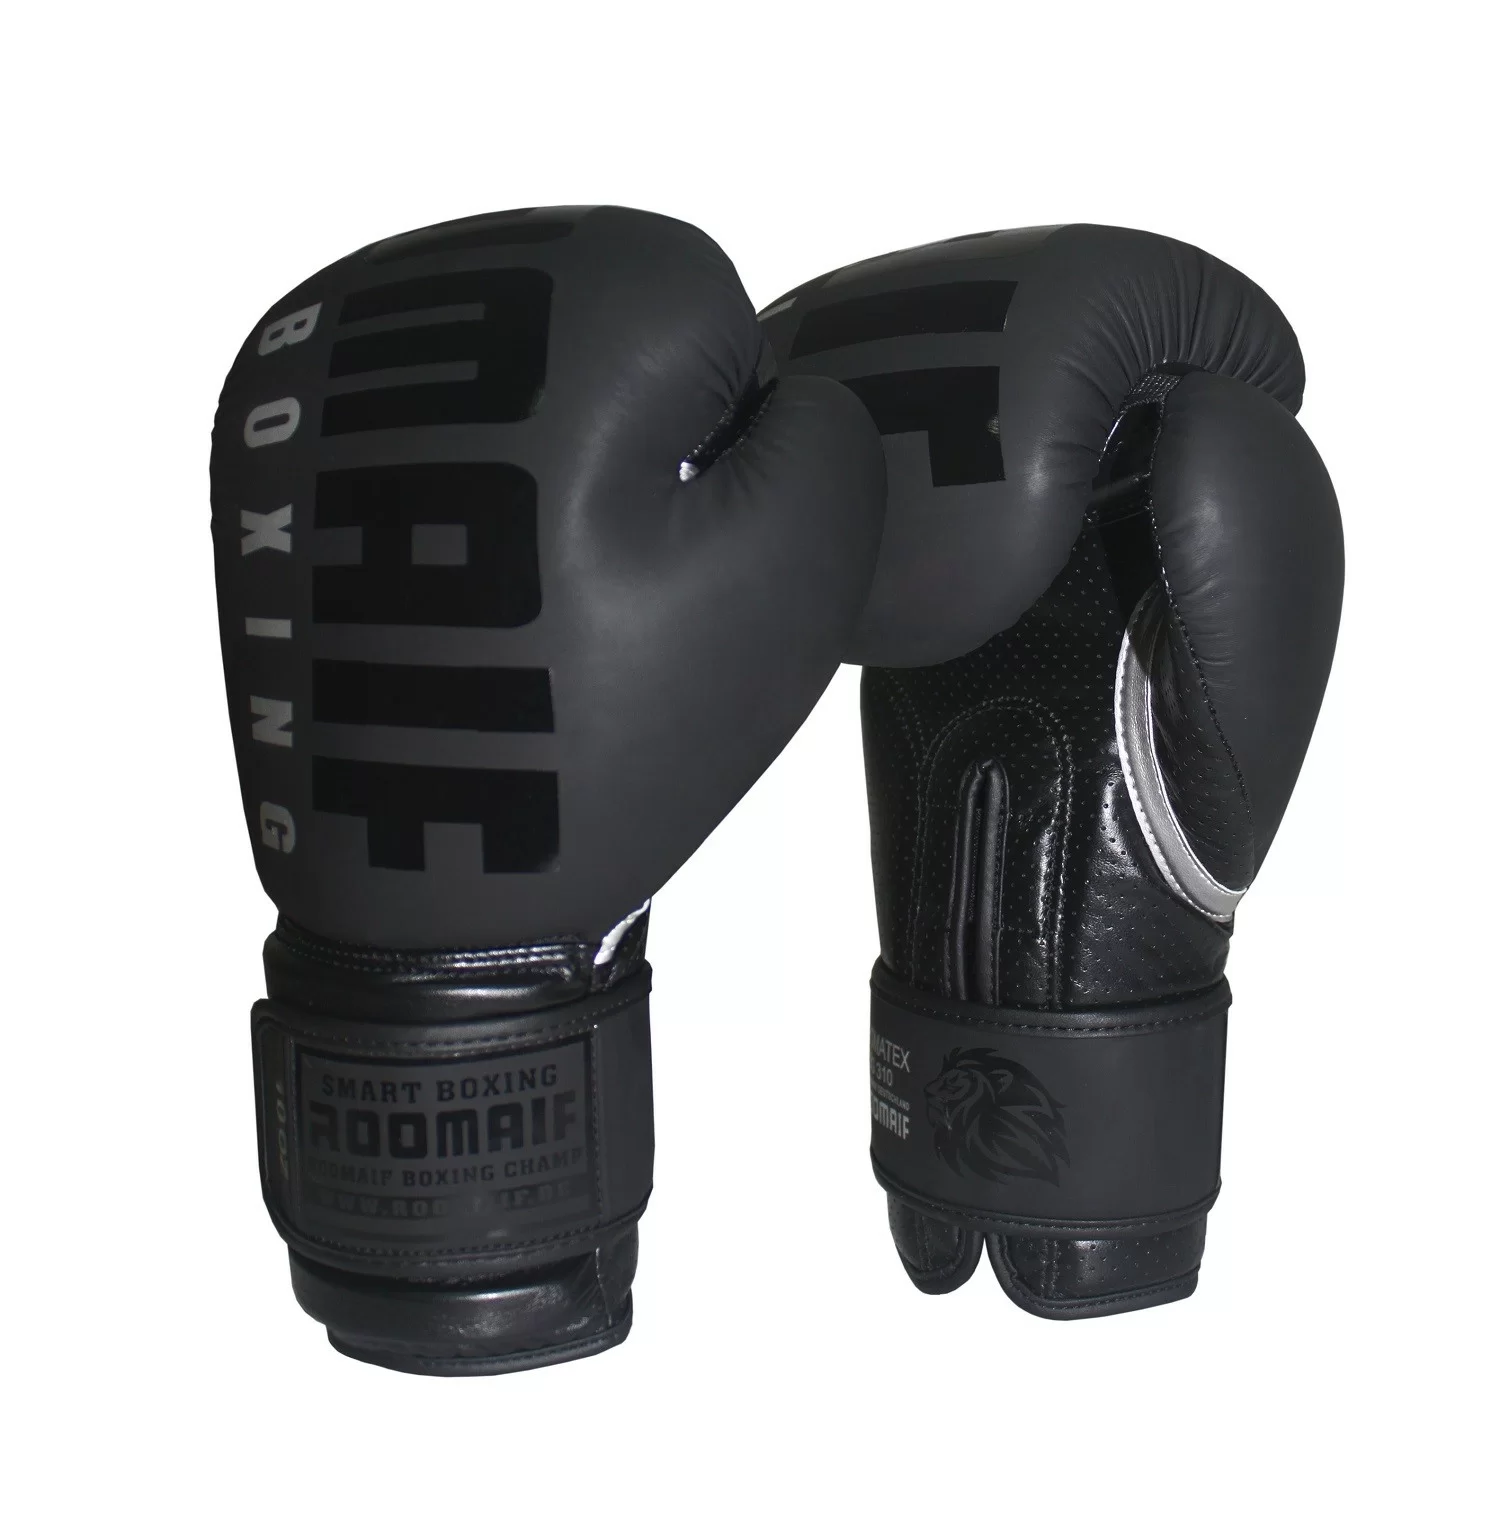 Фото Перчатки боксерские Roomaif RBG-310 Dyex black со склада магазина СпортСЕ